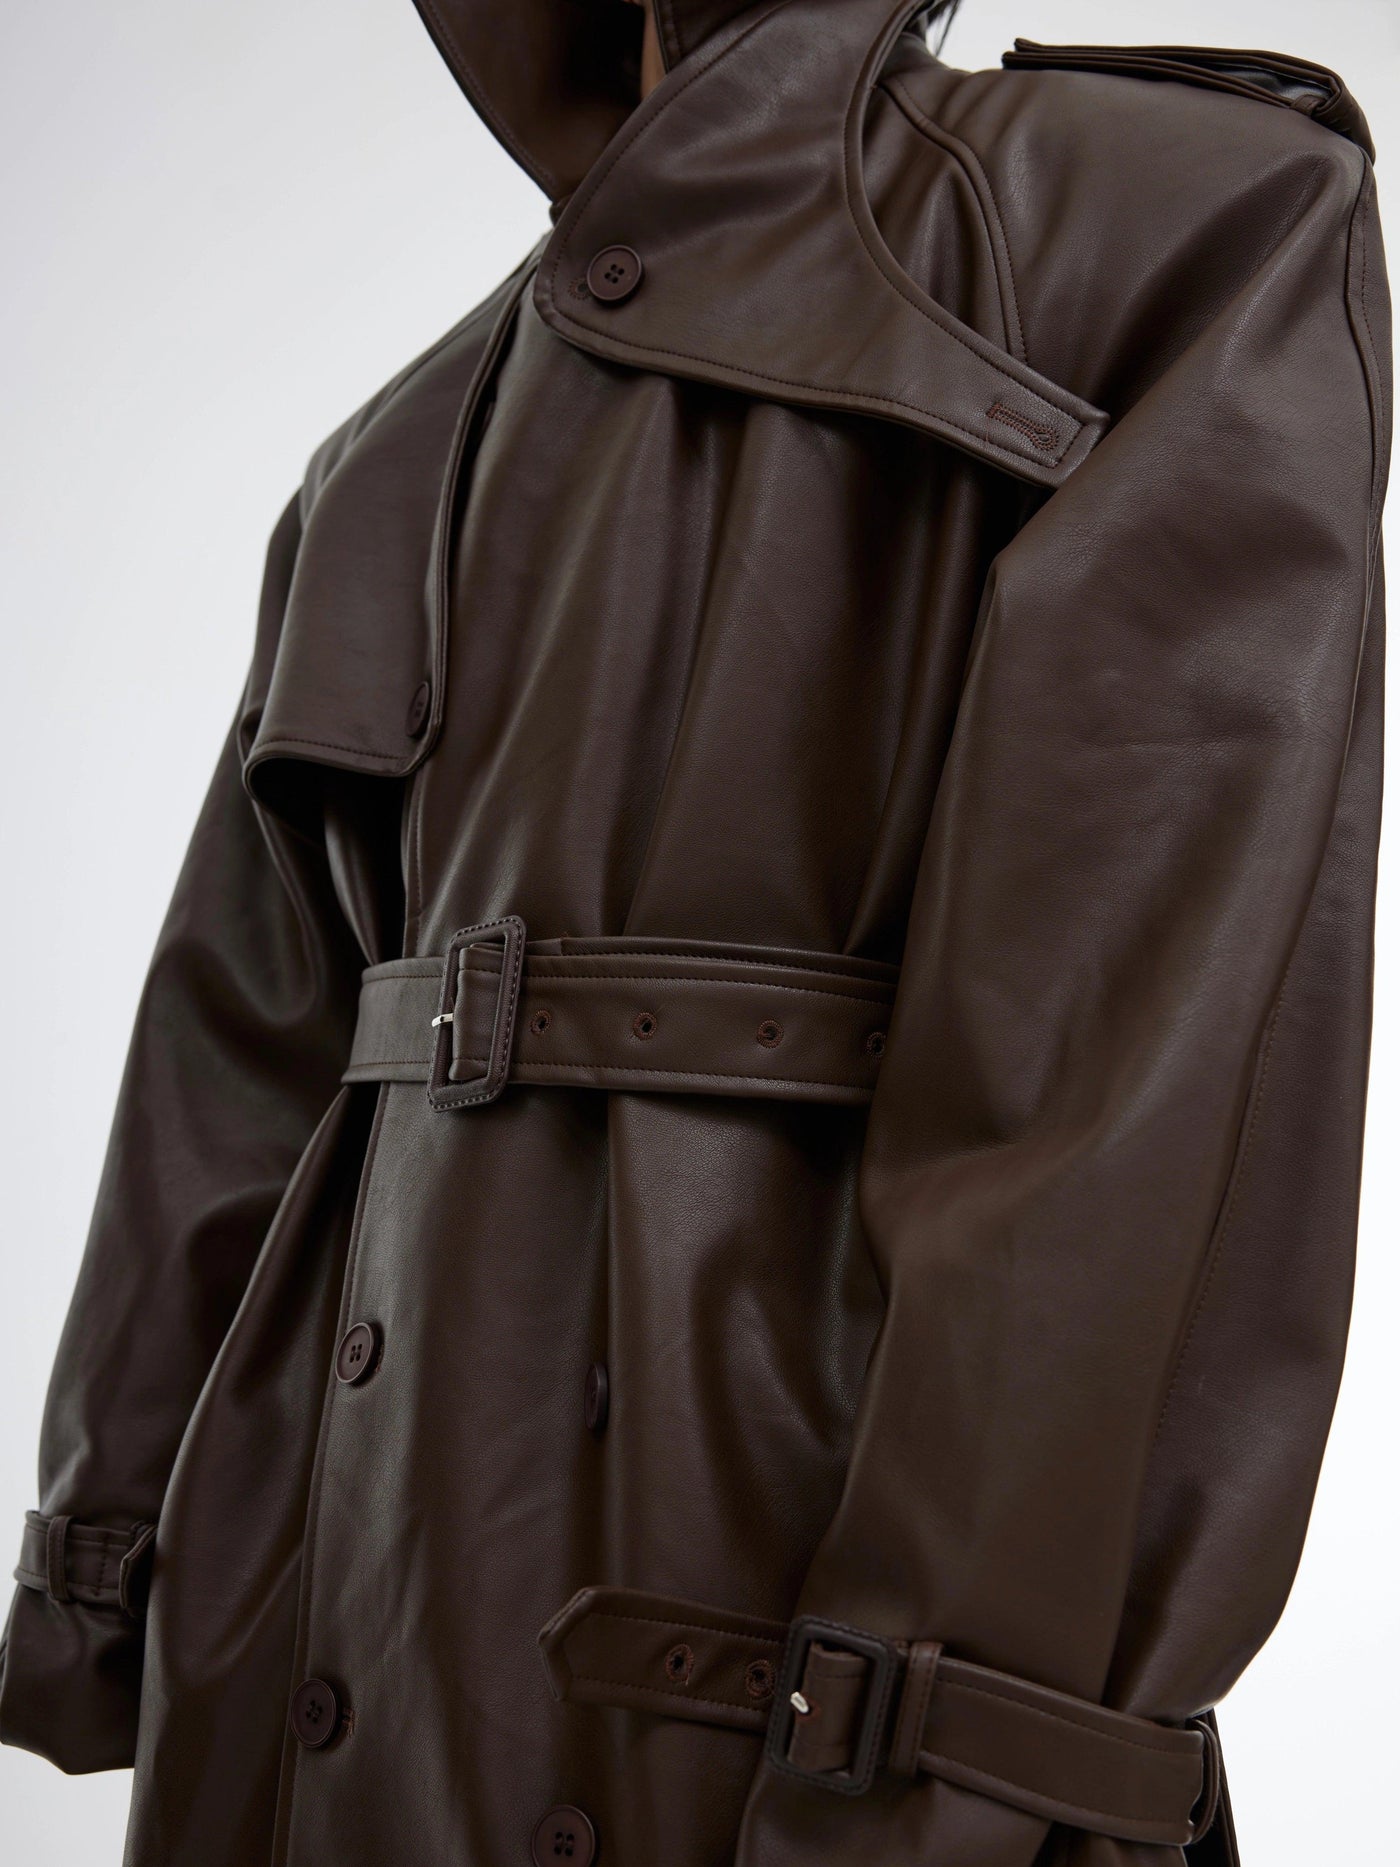 Strap PU Leather Long Coat Korean Street Fashion Long Coat By Argue Culture Shop Online at OH Vault